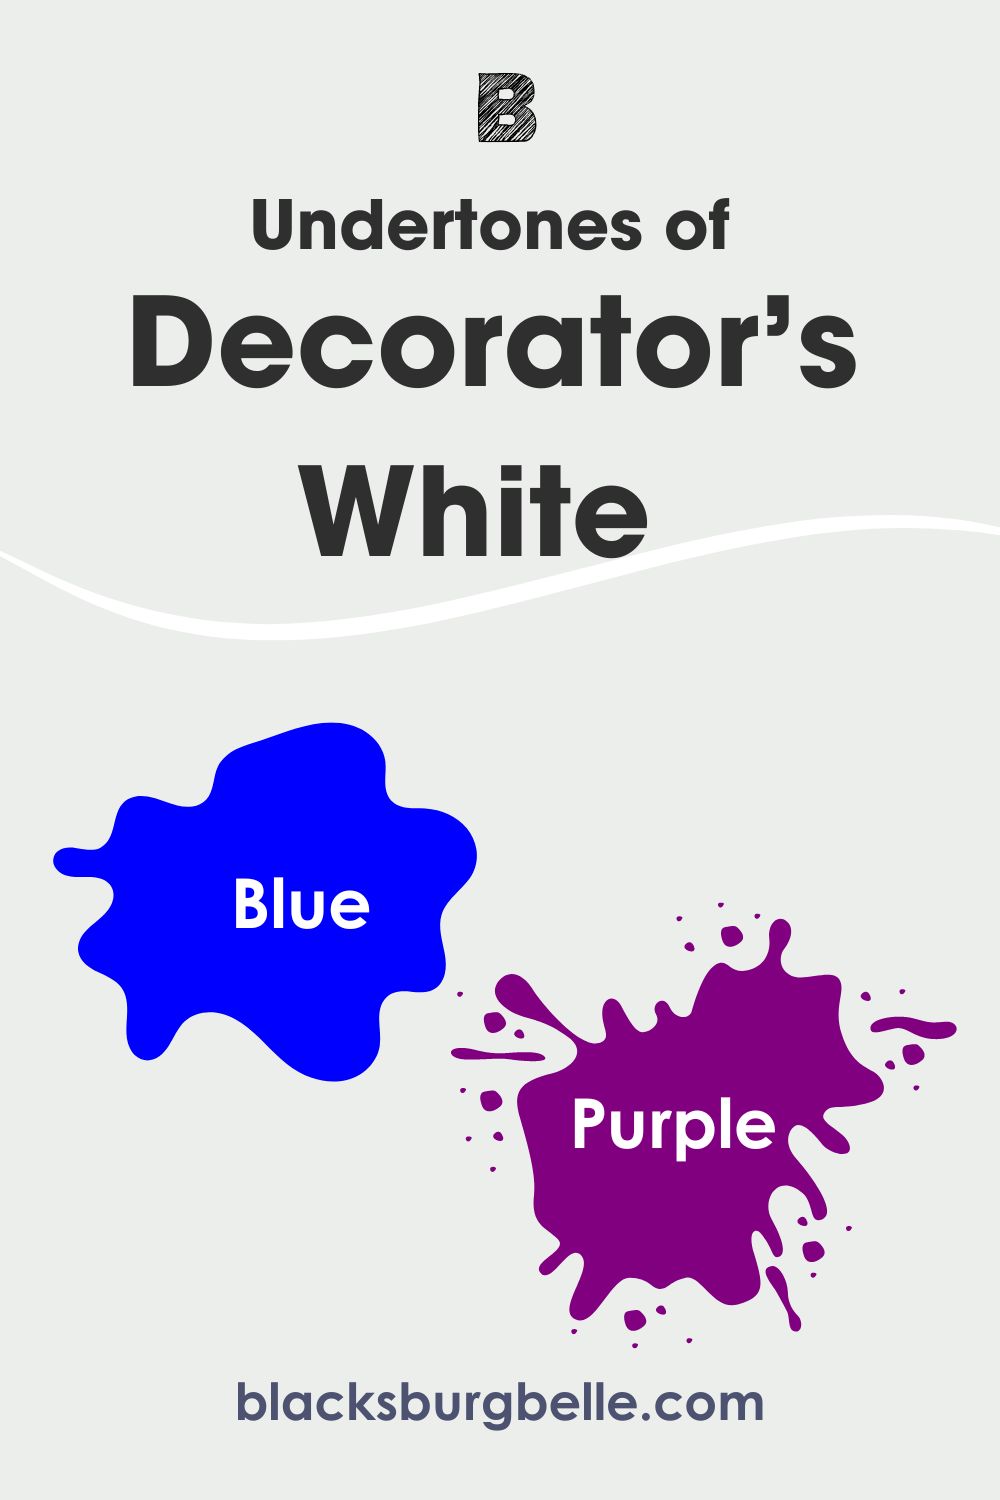 Undertones of Simply White vs. Decorator’s White